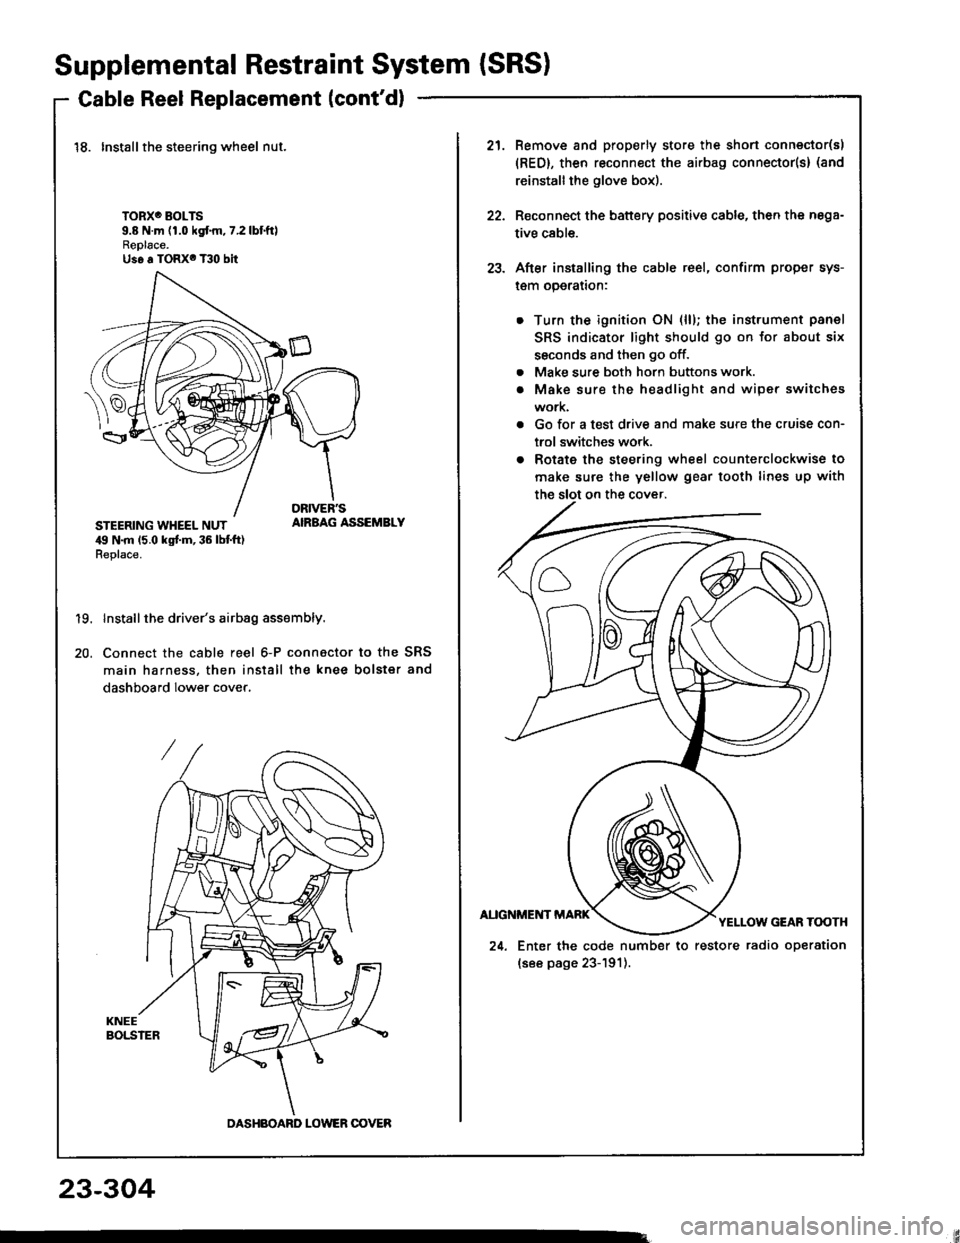 HONDA INTEGRA 1994 4.G Repair Manual Supplemental Restraint System {SRSI
Cable Reel Replacement (contd)
18. Installthe steering wheel nut.
TORXO BOLTS9.8 N.m (1.0 kgf.m,7.2lbtftlReplace.Us6 a TORX6 T30 bit
STEERING WHEEL NUT,19 N.m 15.0